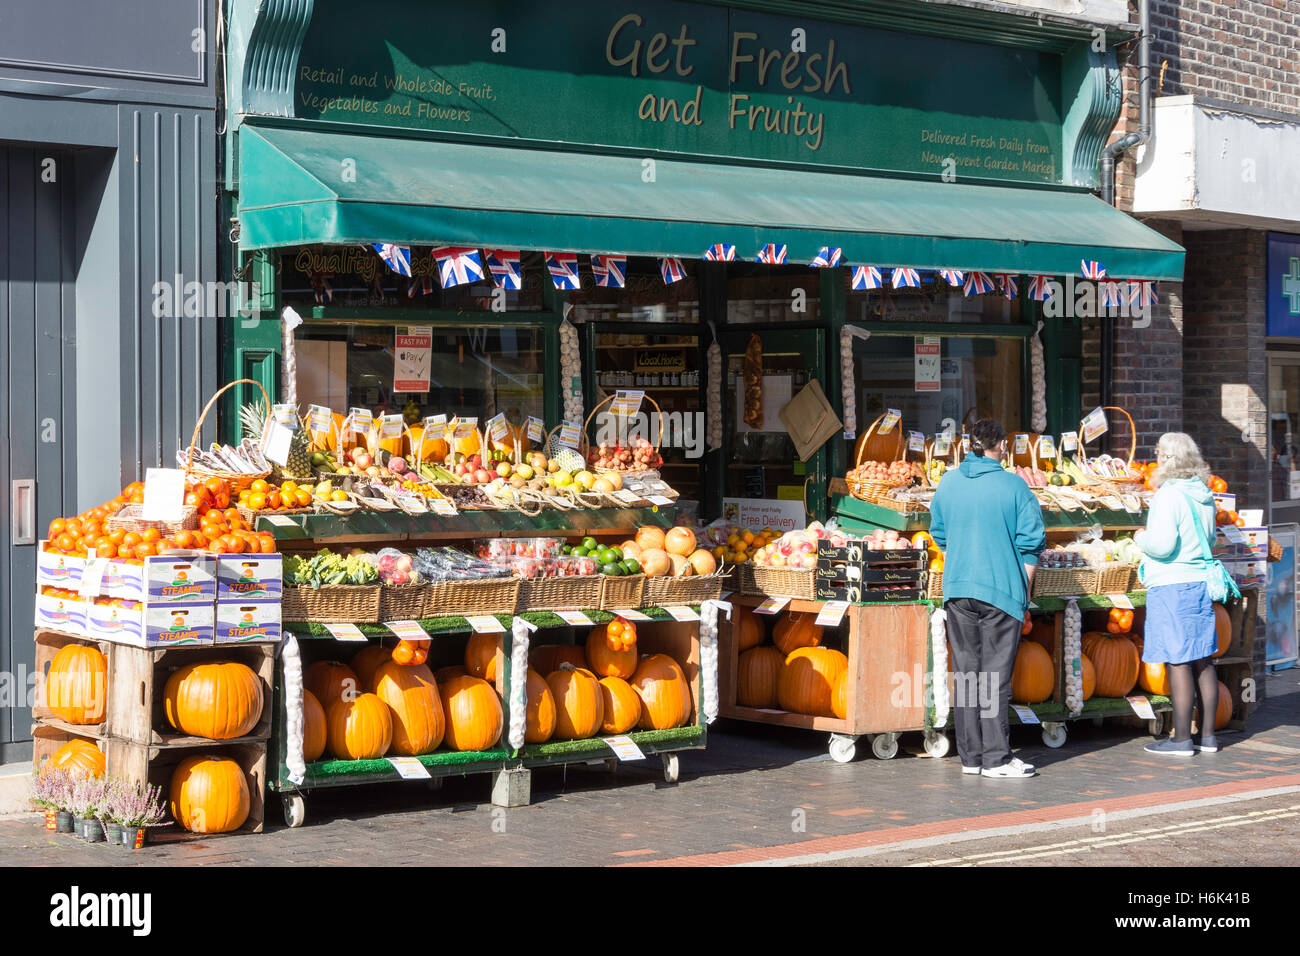 Pumpkin display at Get Fresh fruit and vegetable shop, High Street, Alton, Hampshire, England, United Kingdom Stock Photo